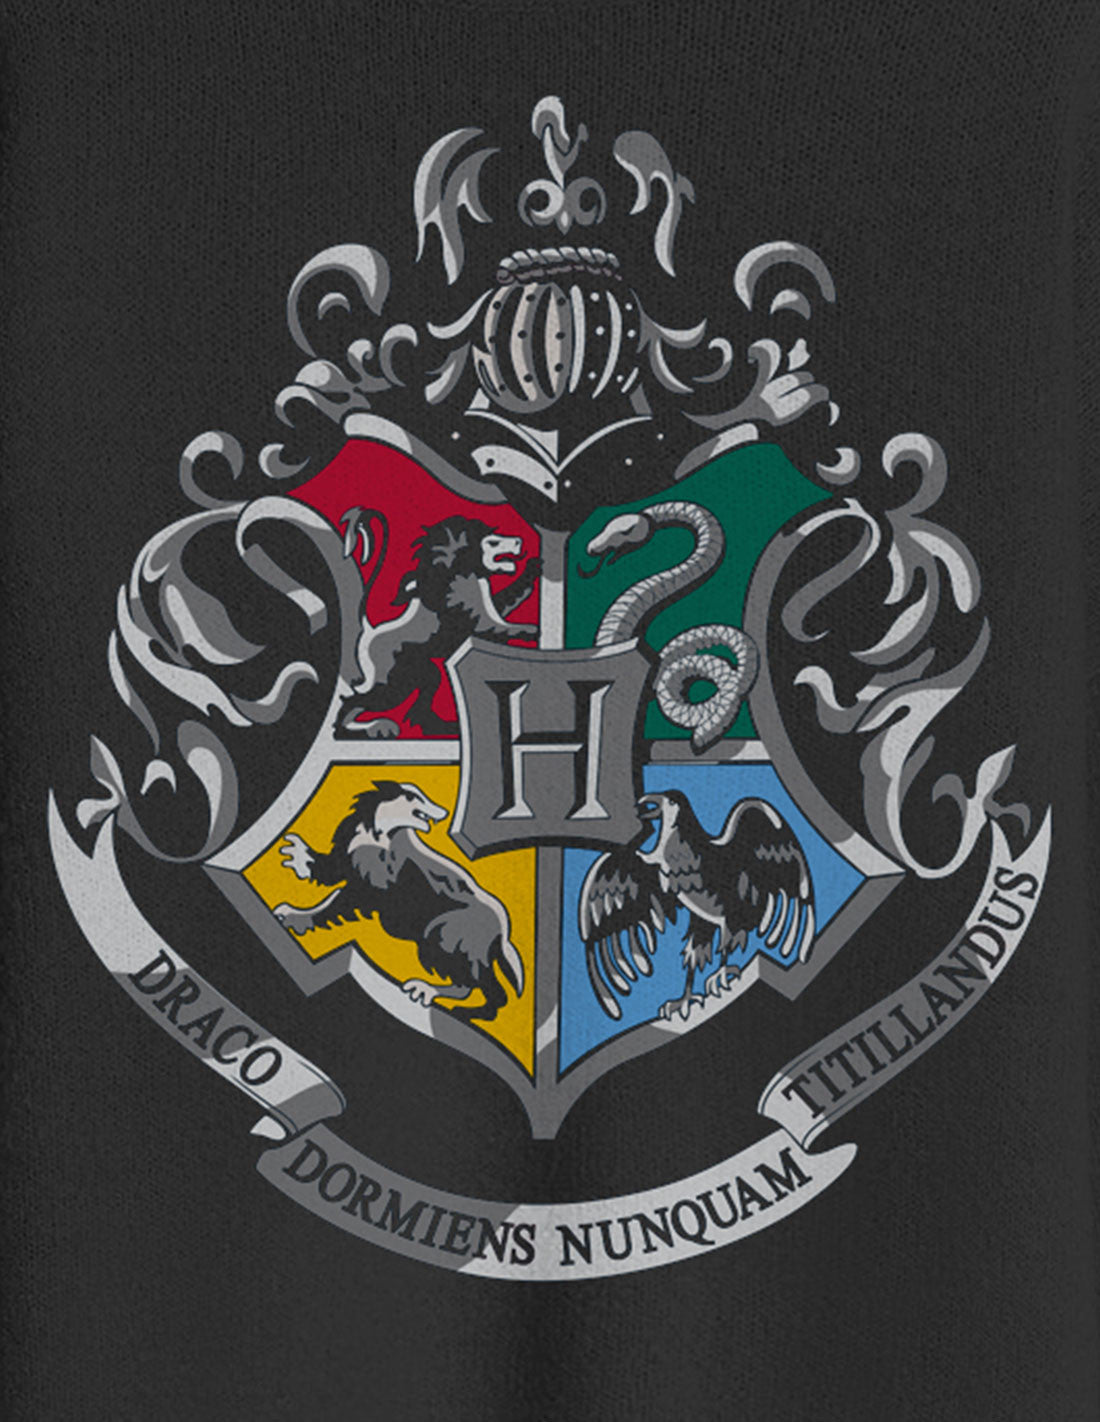 Harry Potter Women's Long Sweater - Hogwarts Blazon